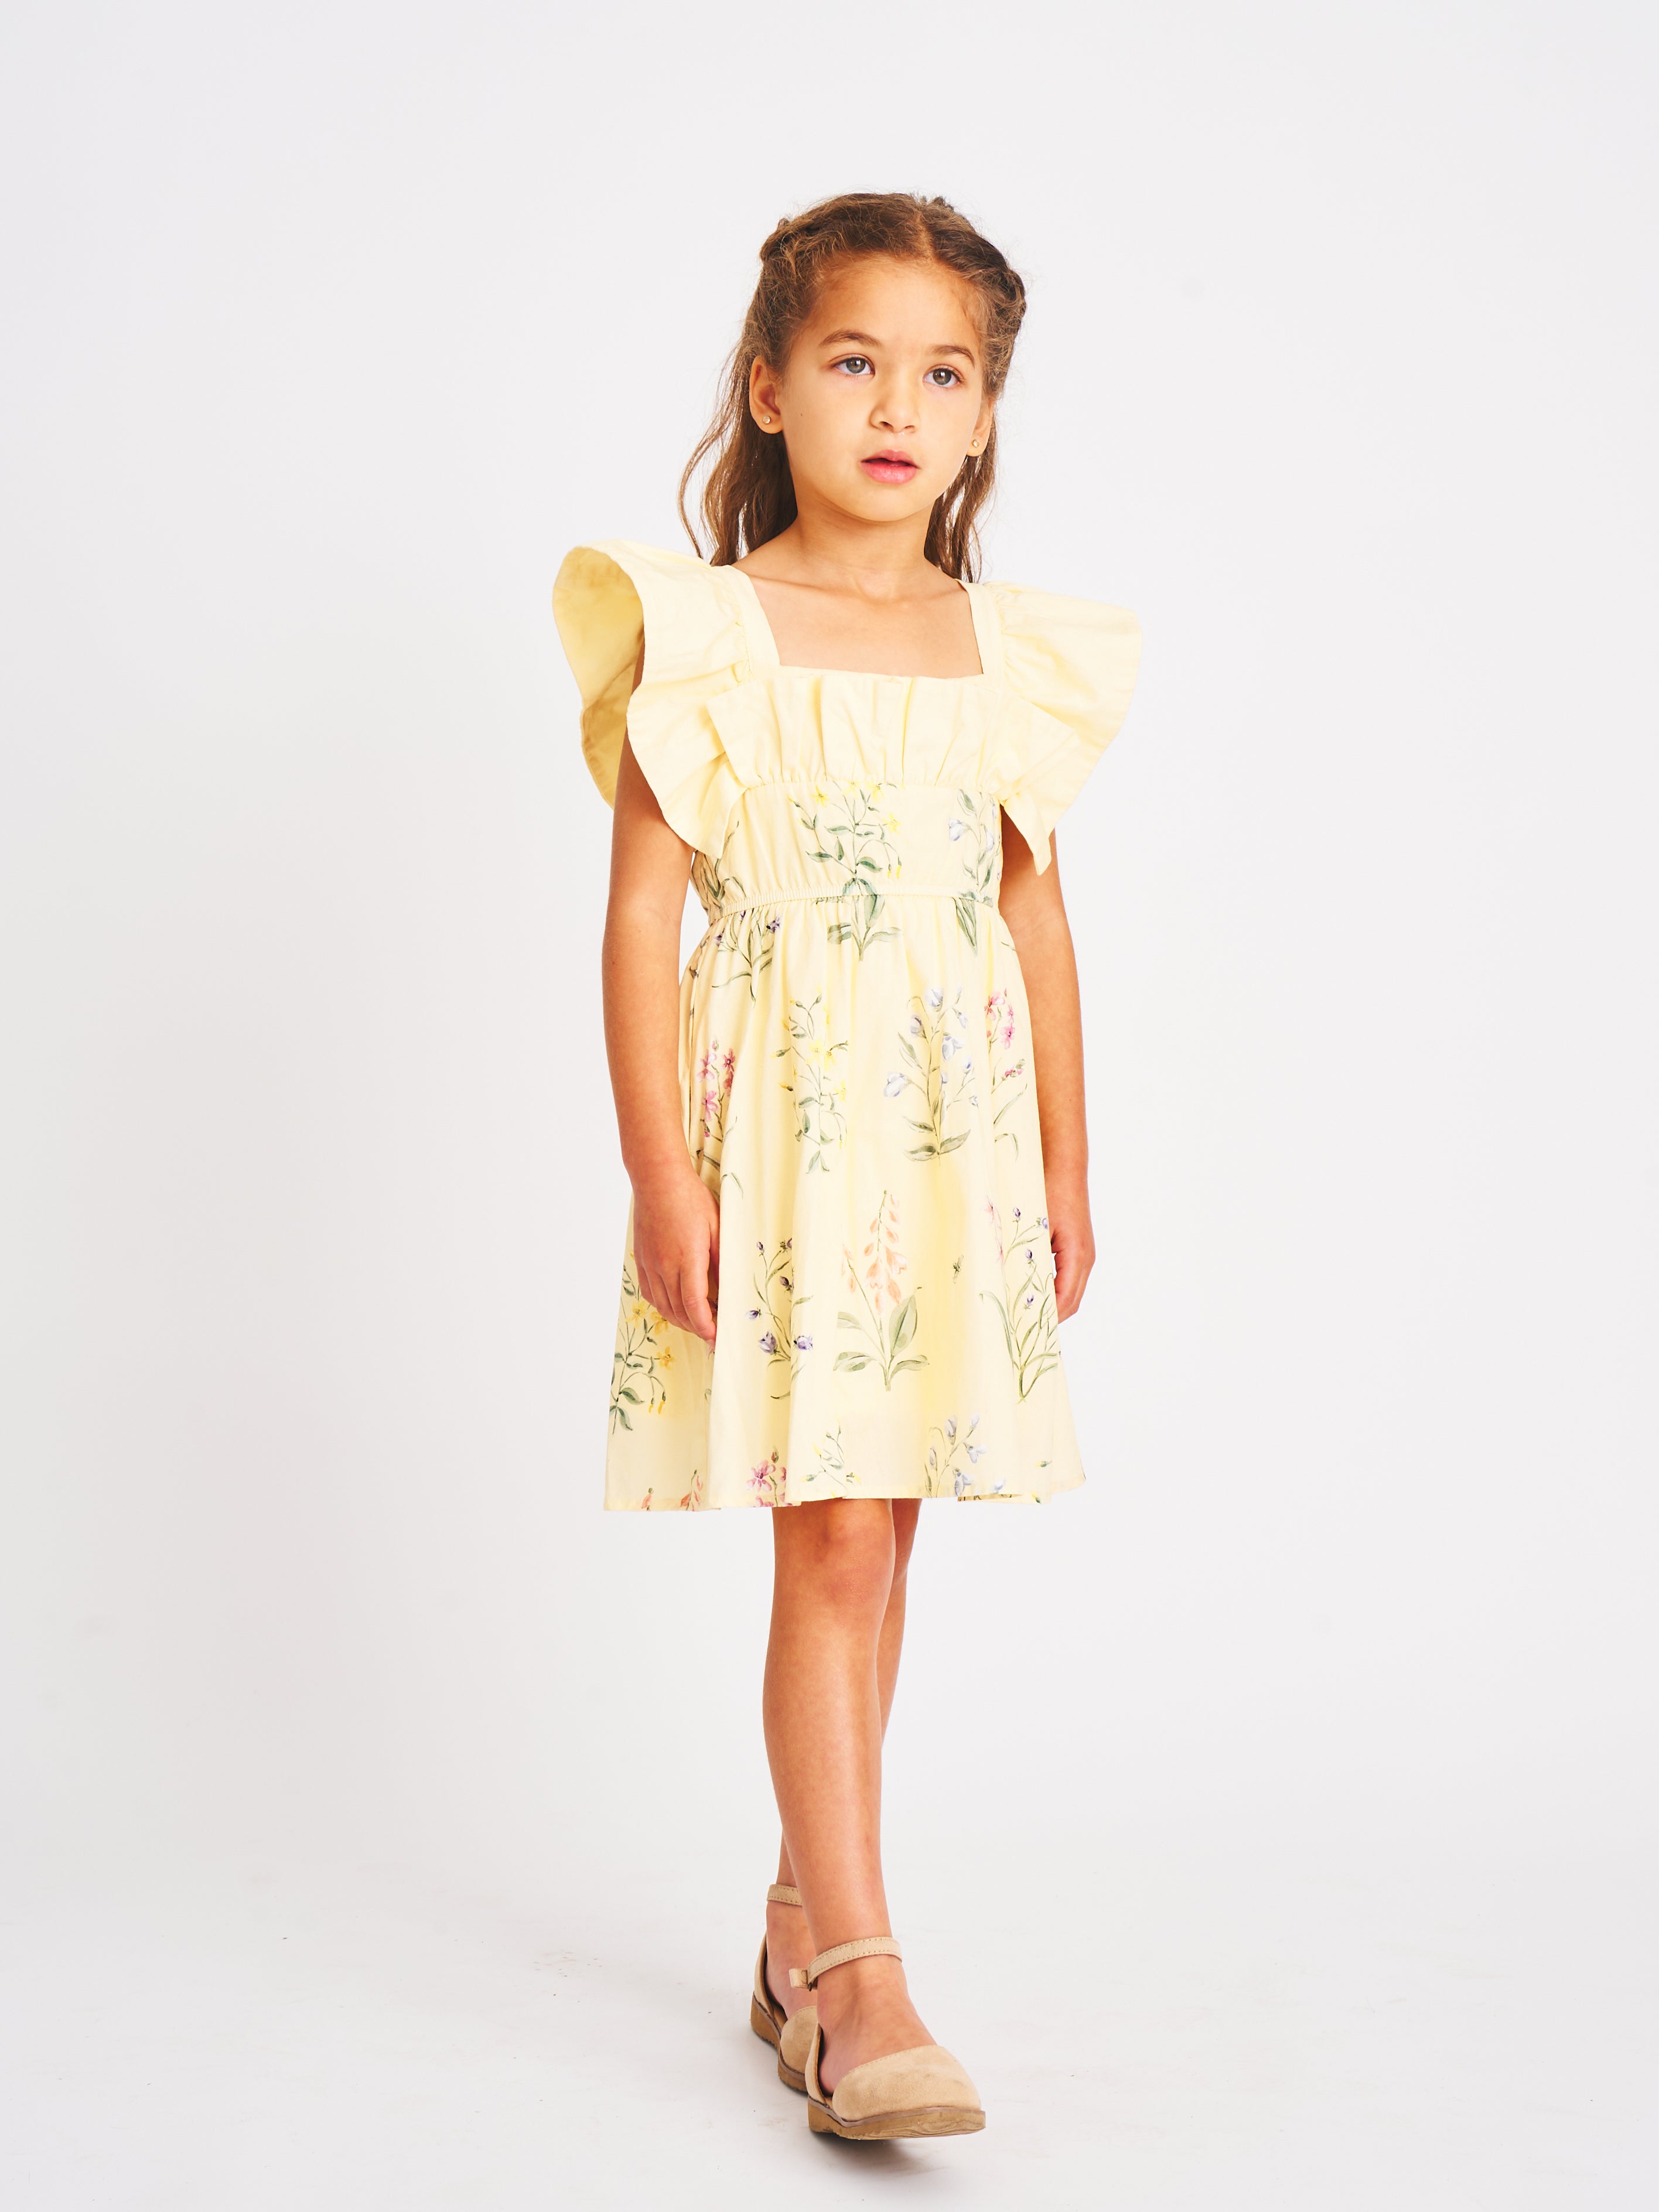 The Elle Baby Dress by Floraison